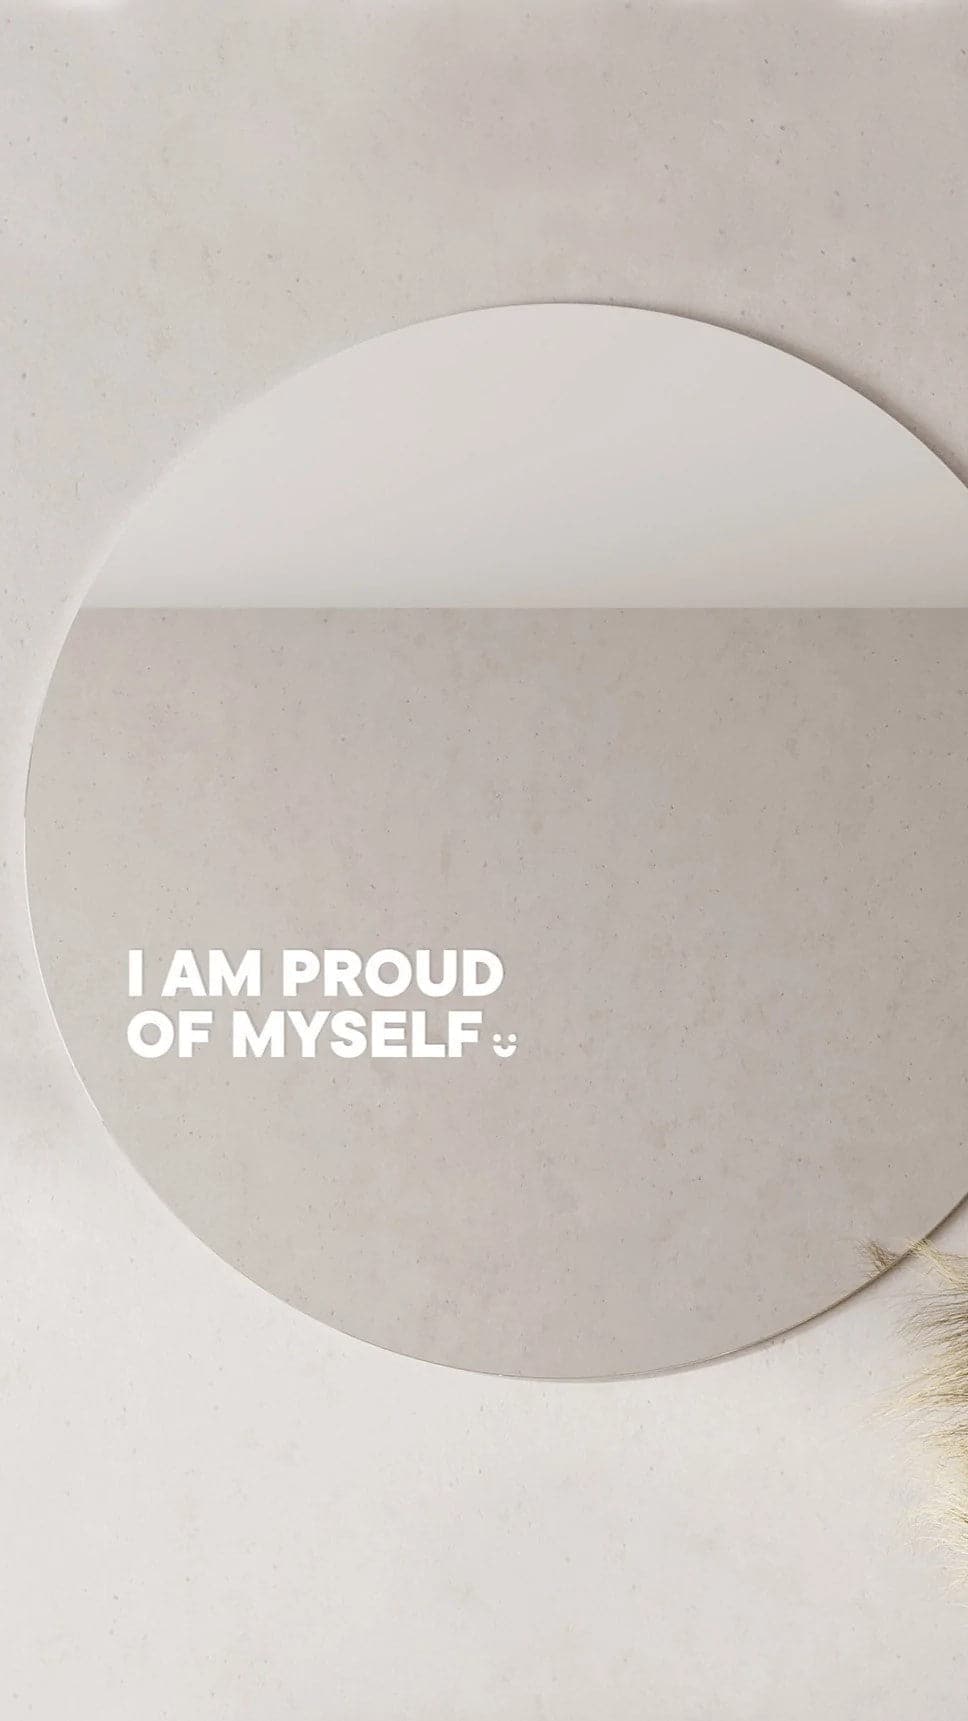 I Am Proud Of Myself - Affirmation Mirror Sticker